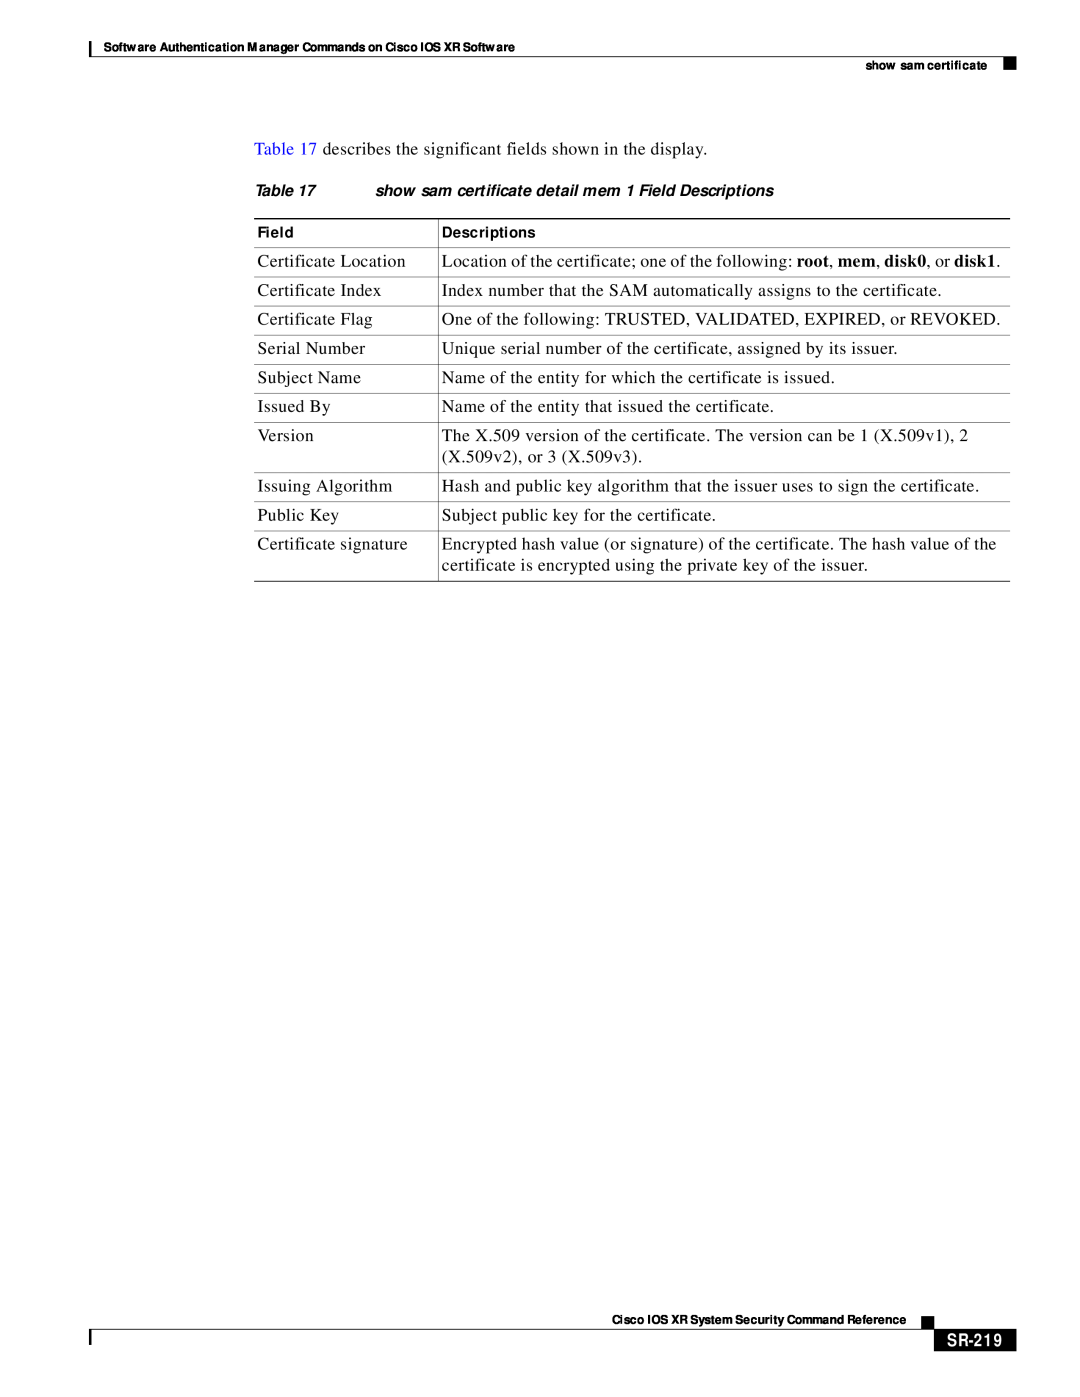 Cisco Systems SR-207 manual Descriptions, SR-219, Field 